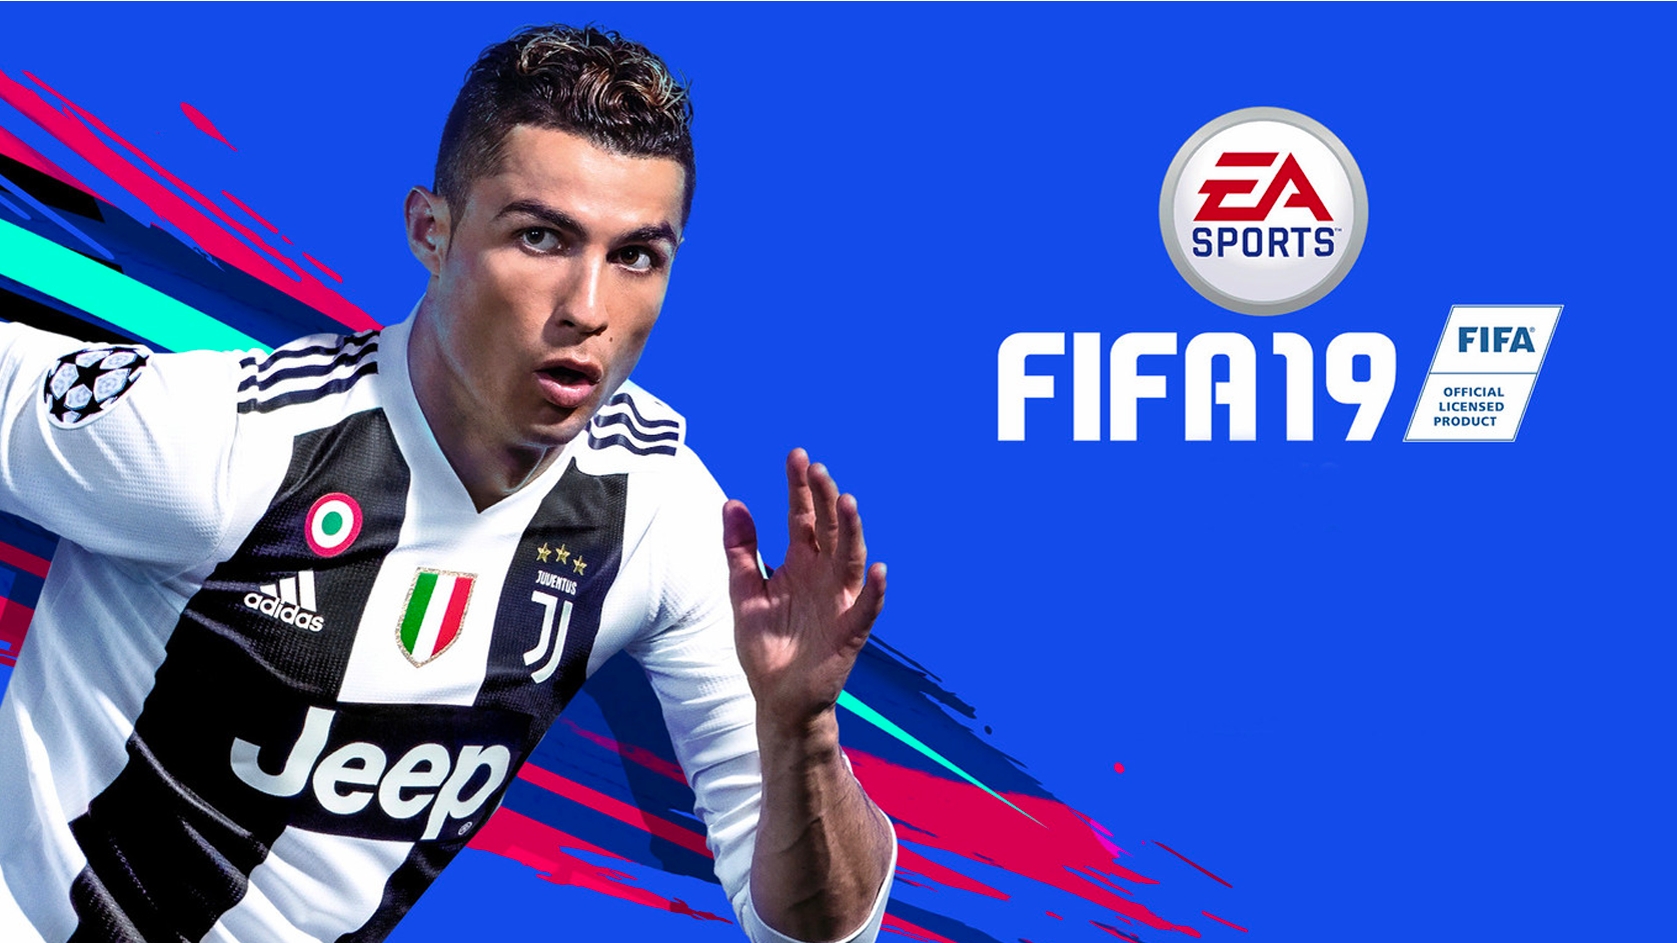 FIFA 19 IOS/APK Download